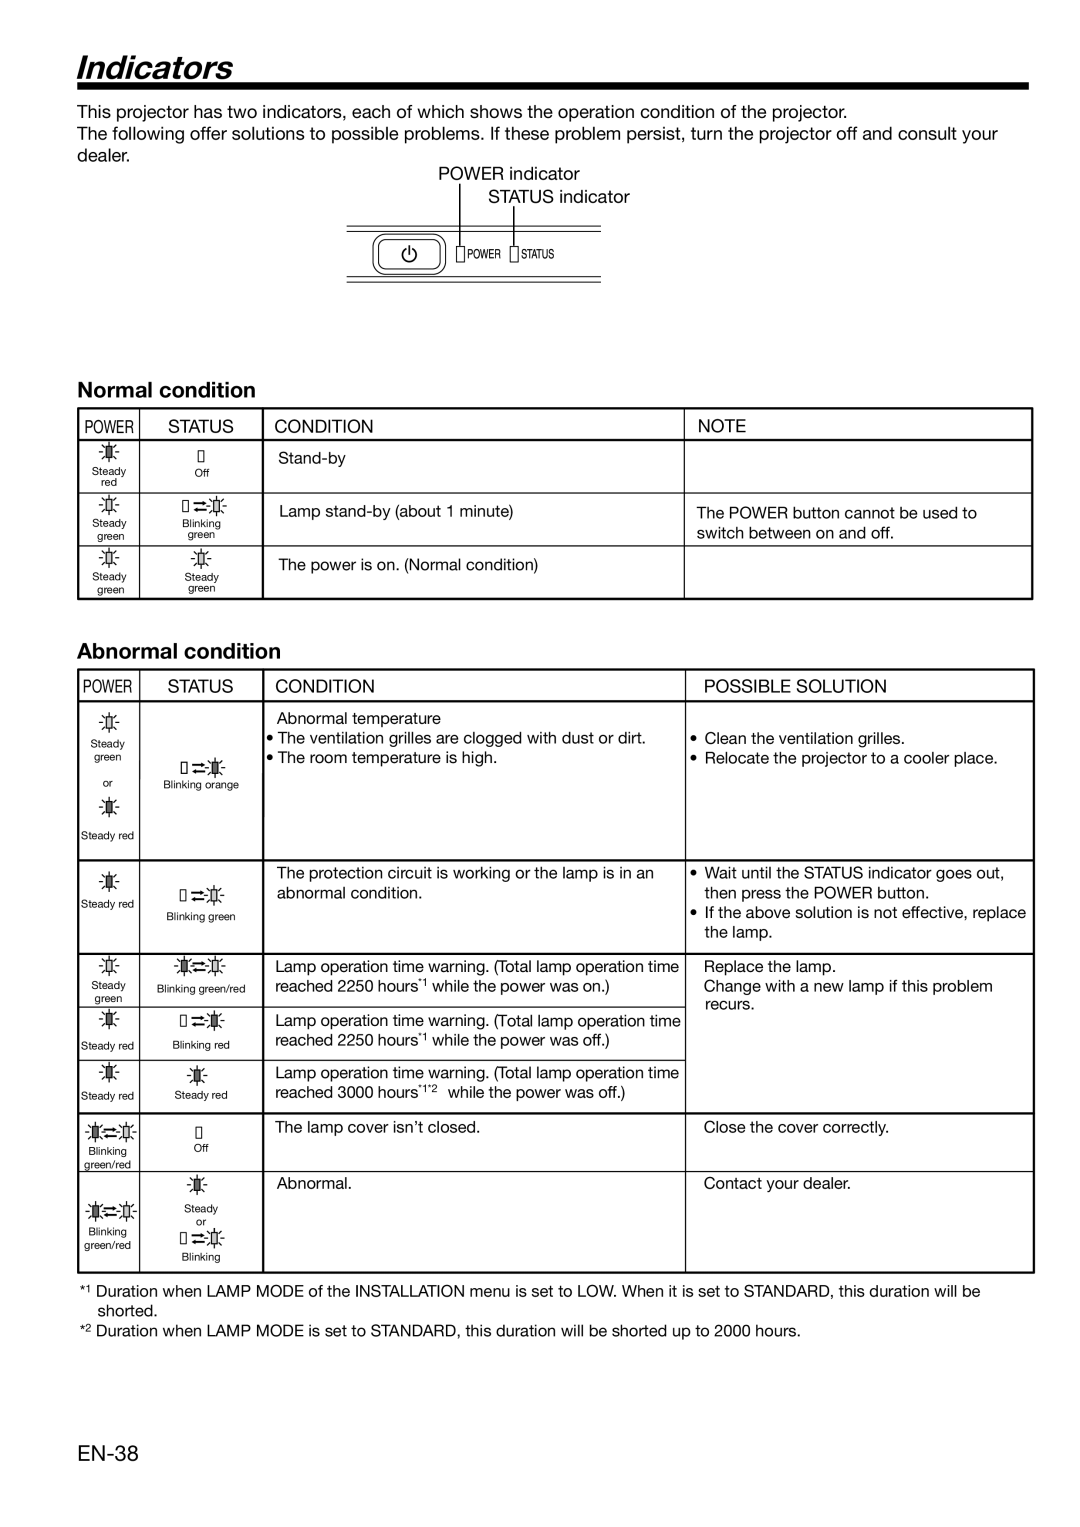 Mitsubishi Electronics HC3100 user manual Indicators, Normal condition, Abnormal condition 